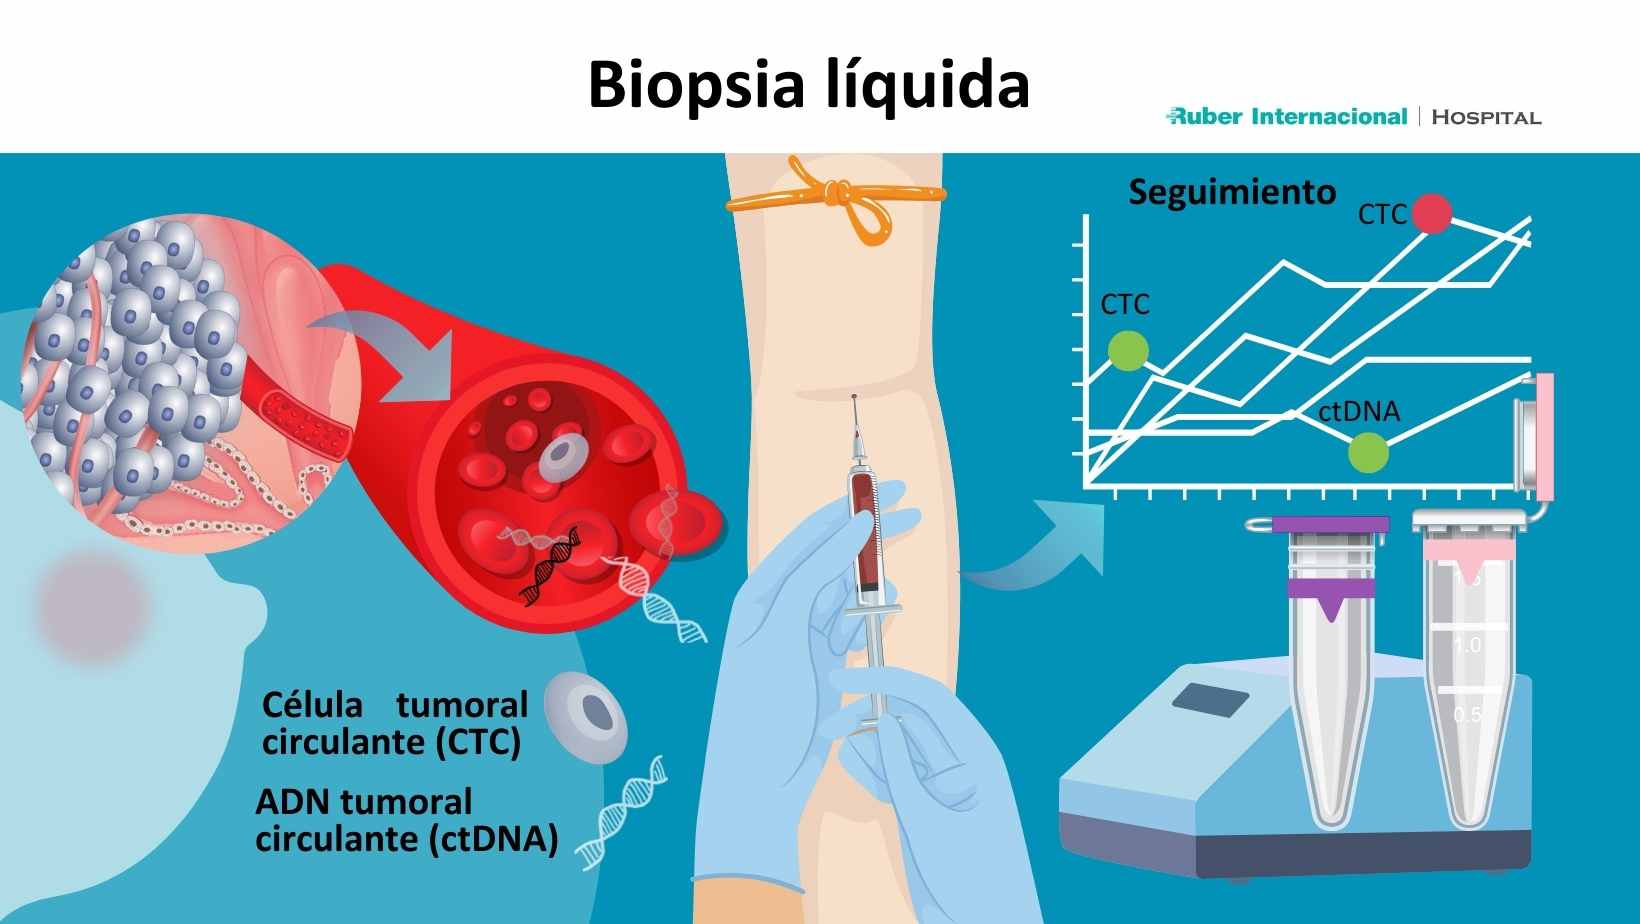 Cáncer de mama biopsia líquida diagnóstico precoz dr Javier Cortés Hospital Ruber Internacional